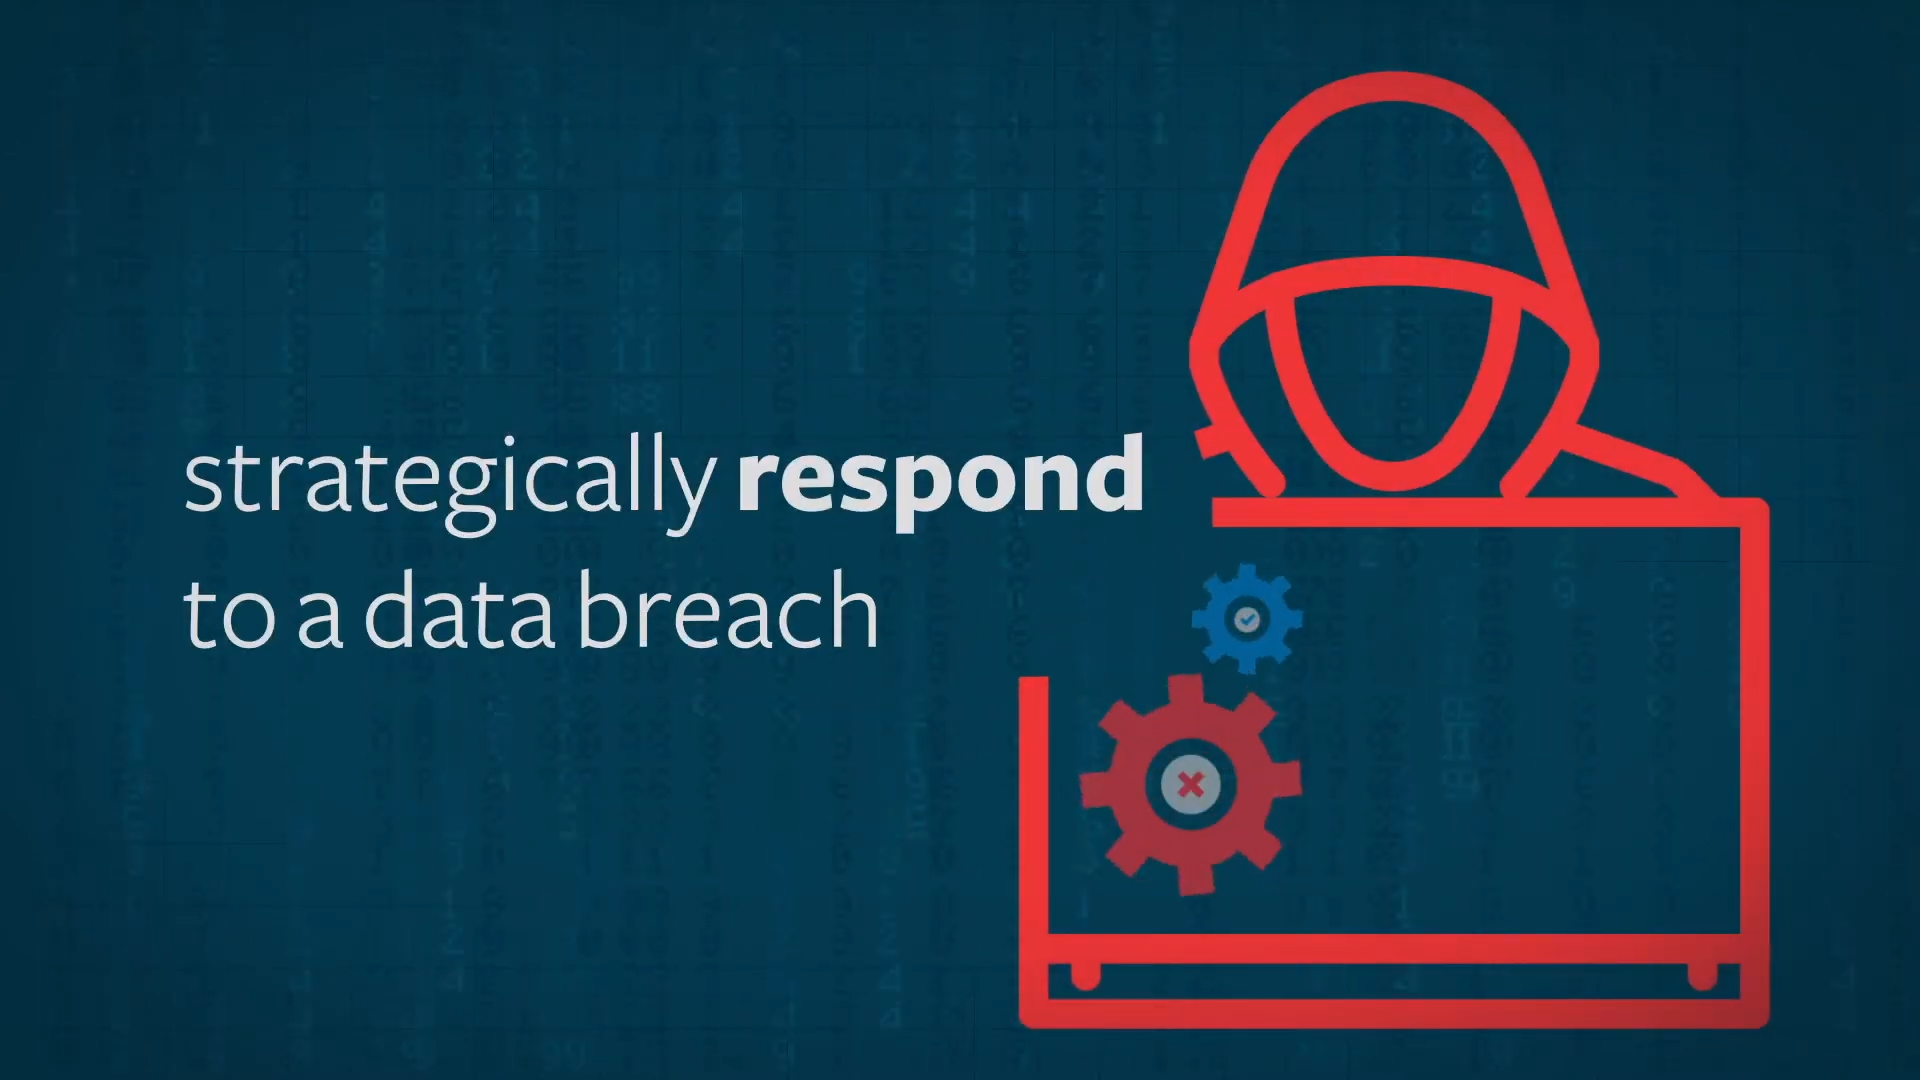 A Guide For Data Breach Response